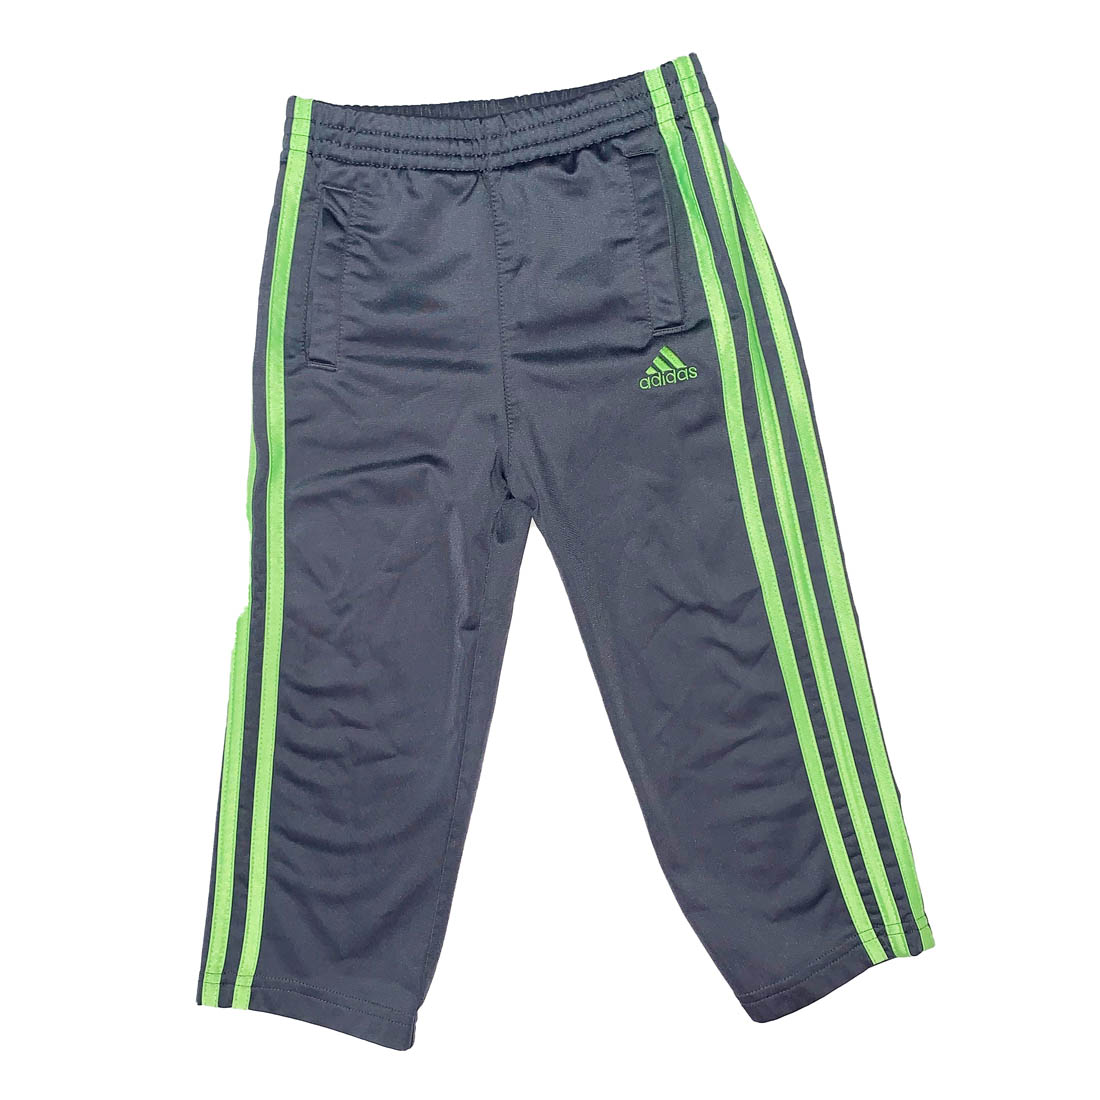 Adidas Boys' Core 3-Stripes Joggers Pants Charcoal Grey Heather | eBay